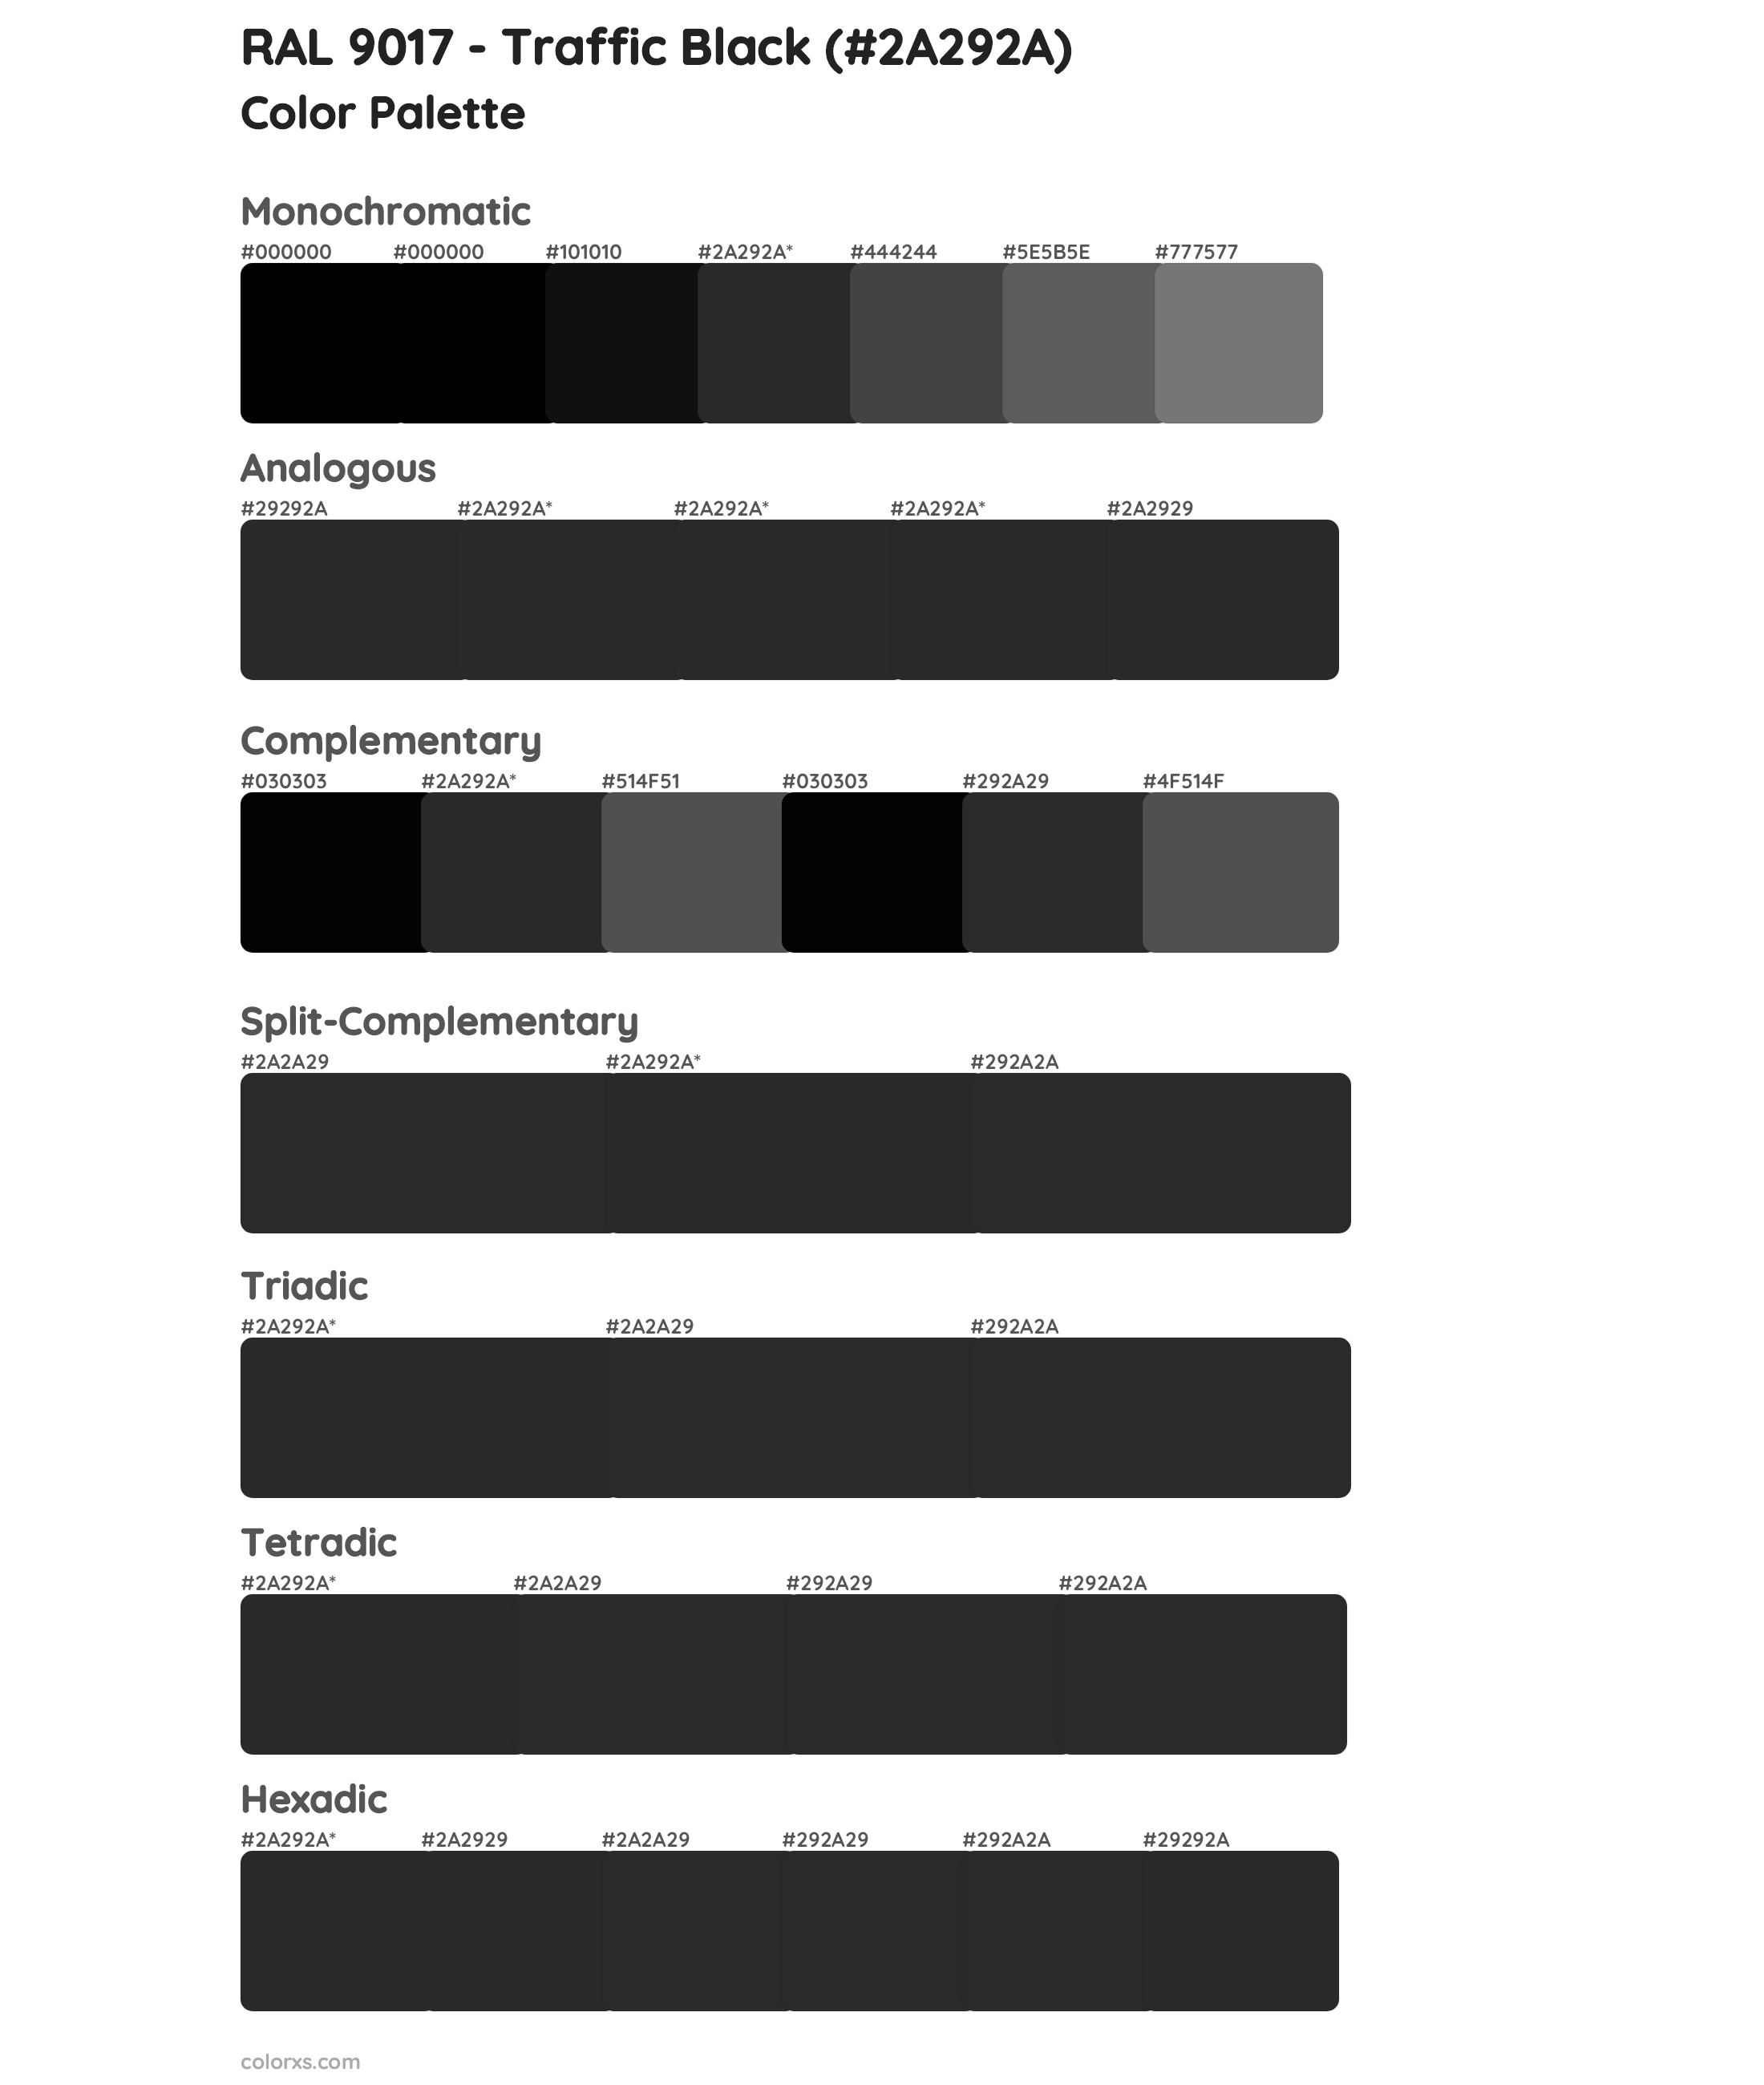 RAL 9017 - Traffic Black Color Scheme Palettes